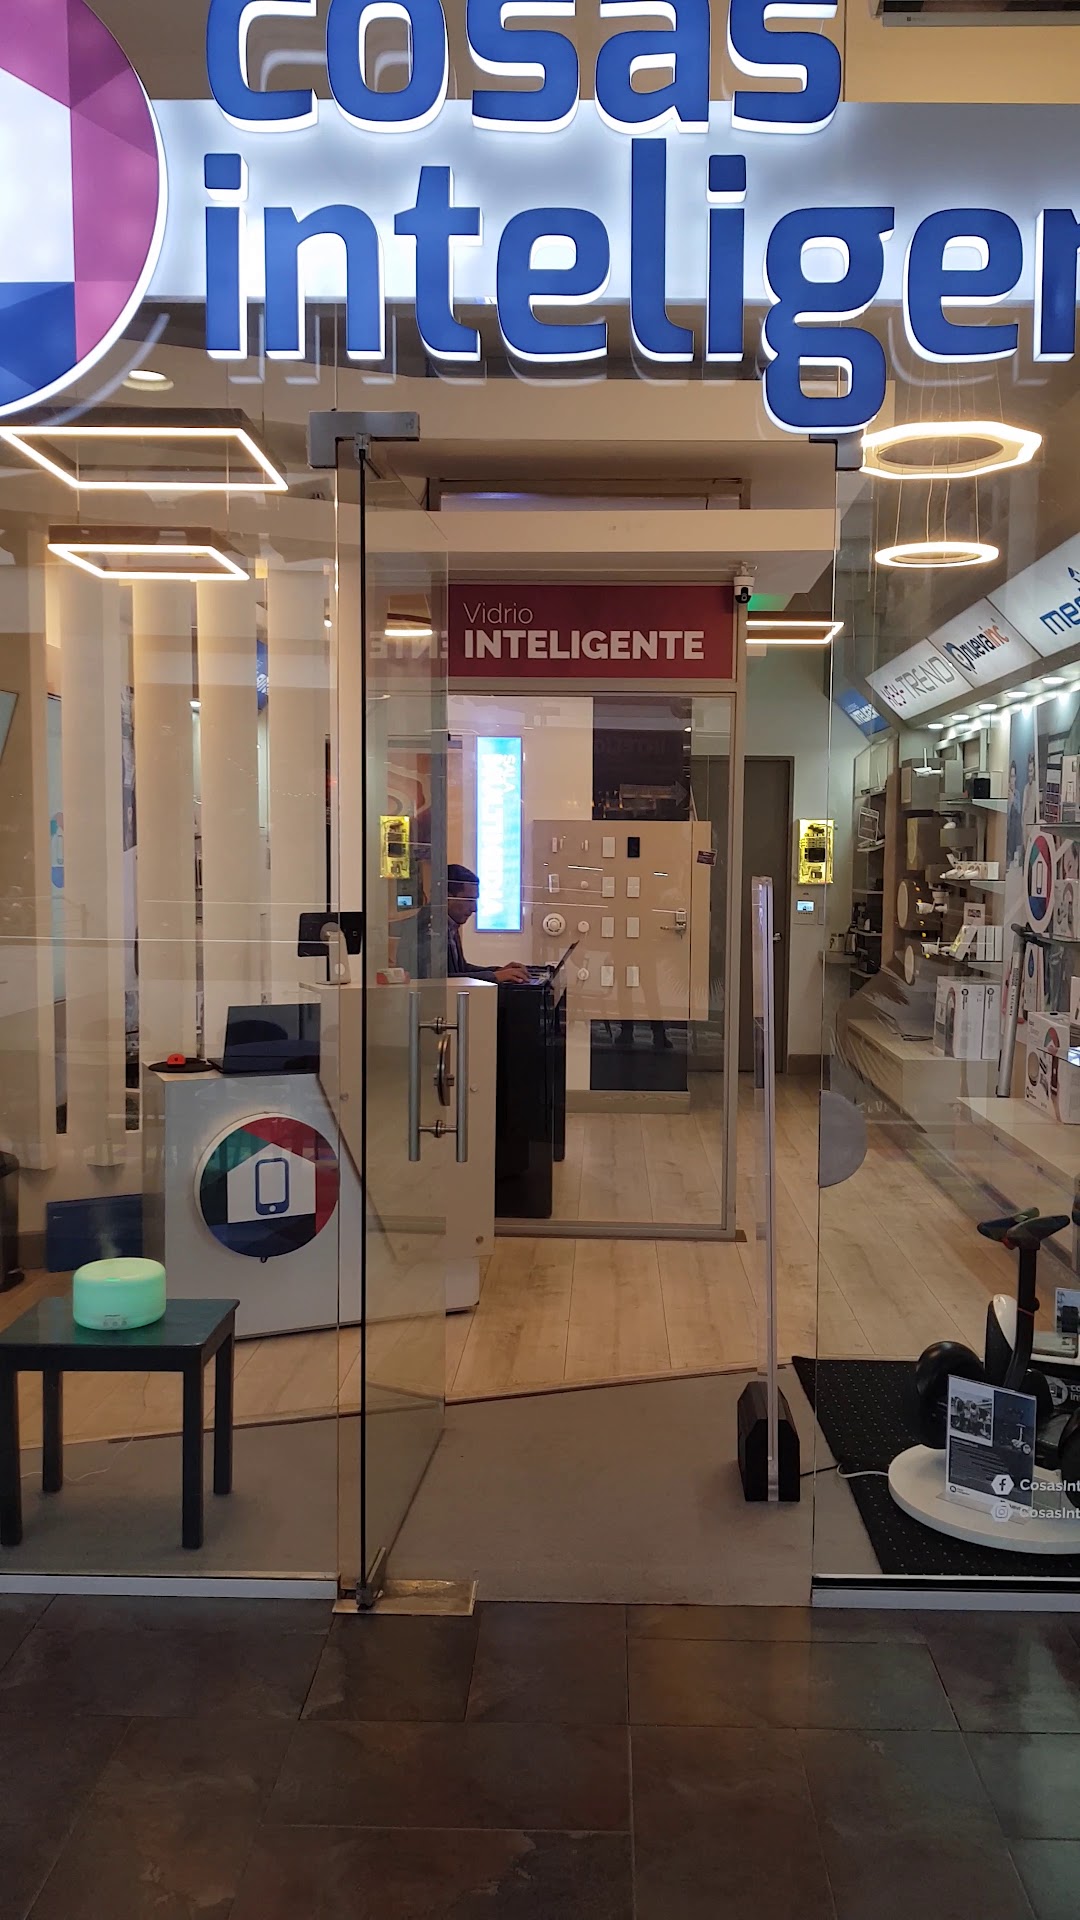 Cosas Inteligentes - El Retiro Shopping Center